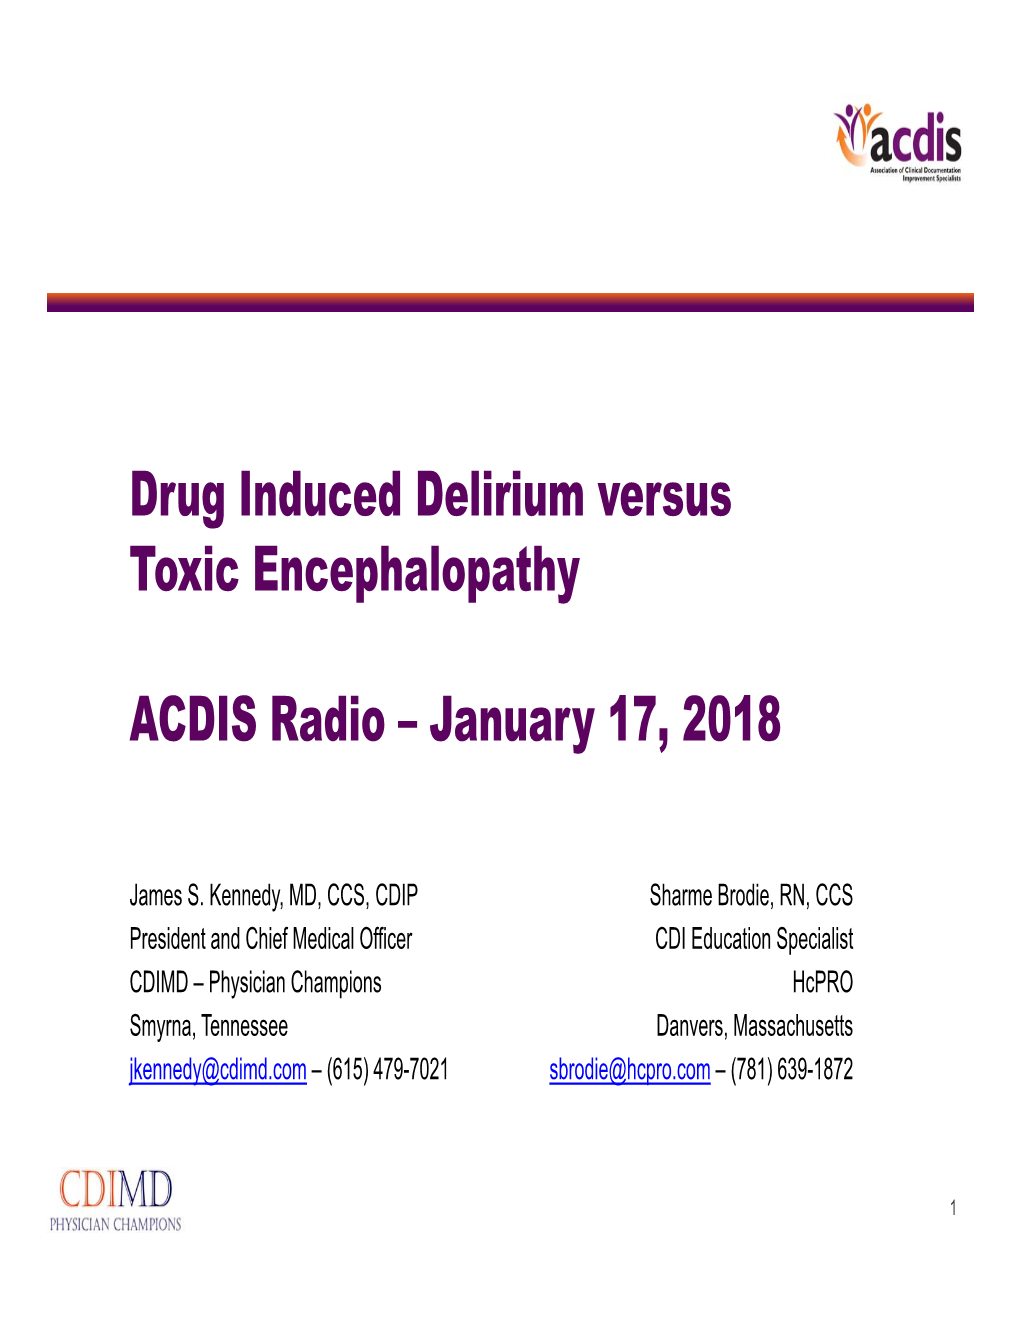 Drug Induced Delirium Versus Toxic Encephalopathy ACDIS Radio